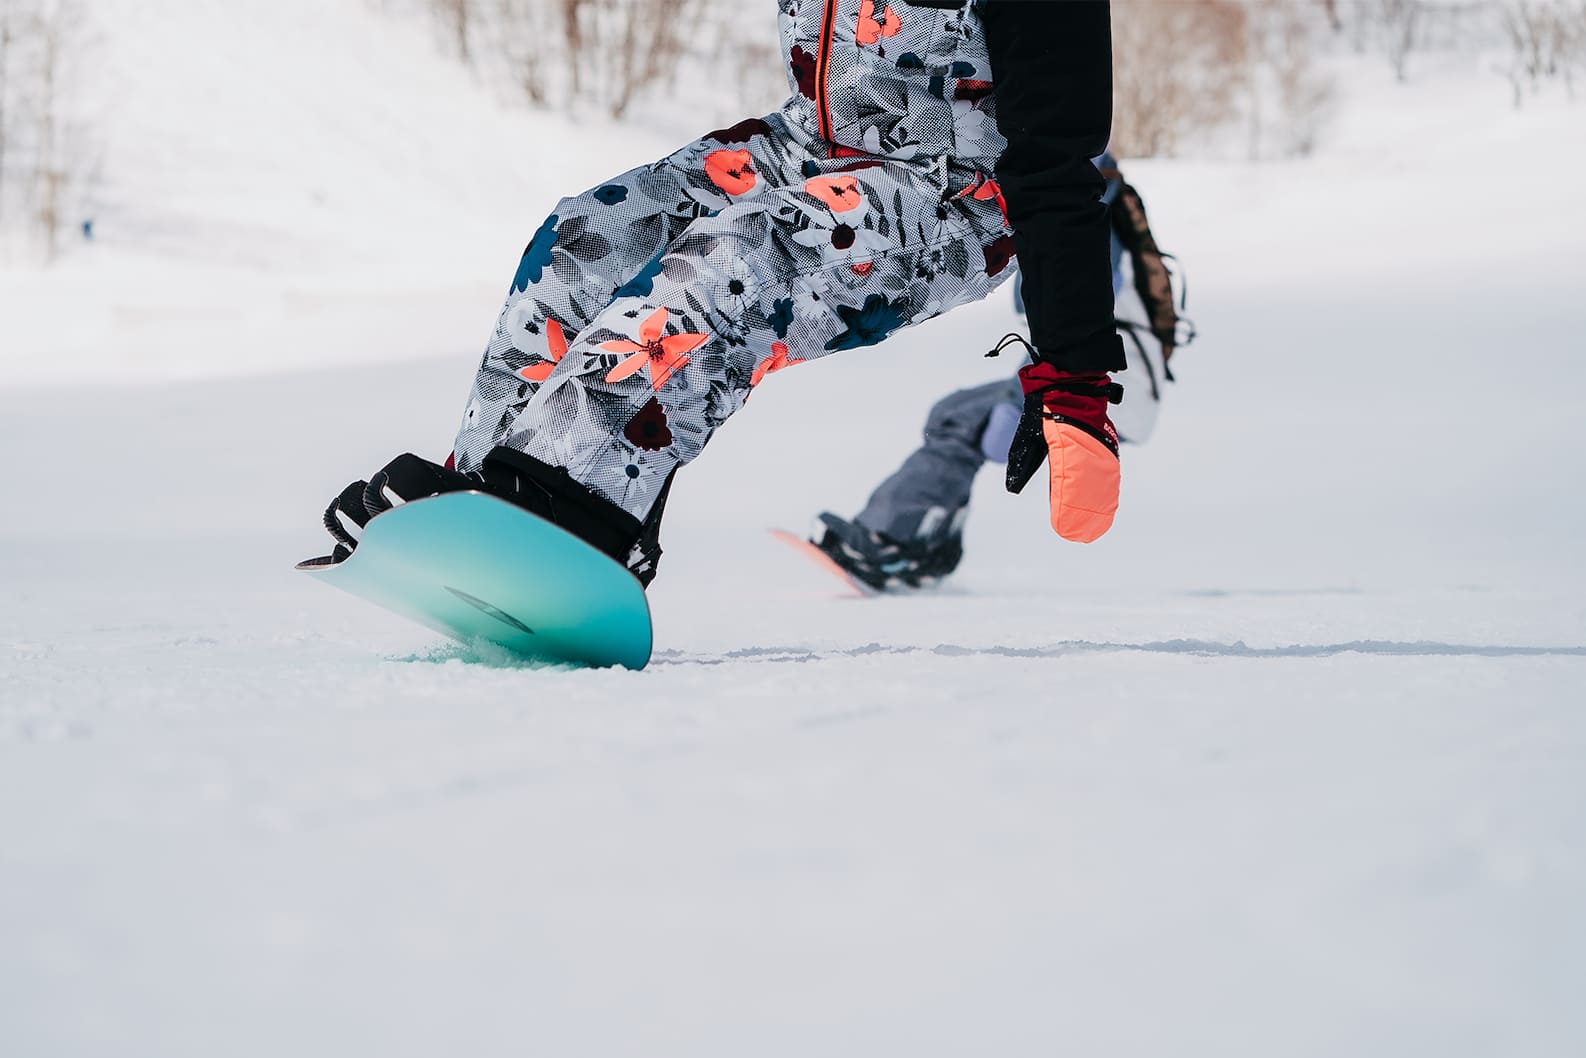 Step On® Bindings: You Need to | Burton Snowboards